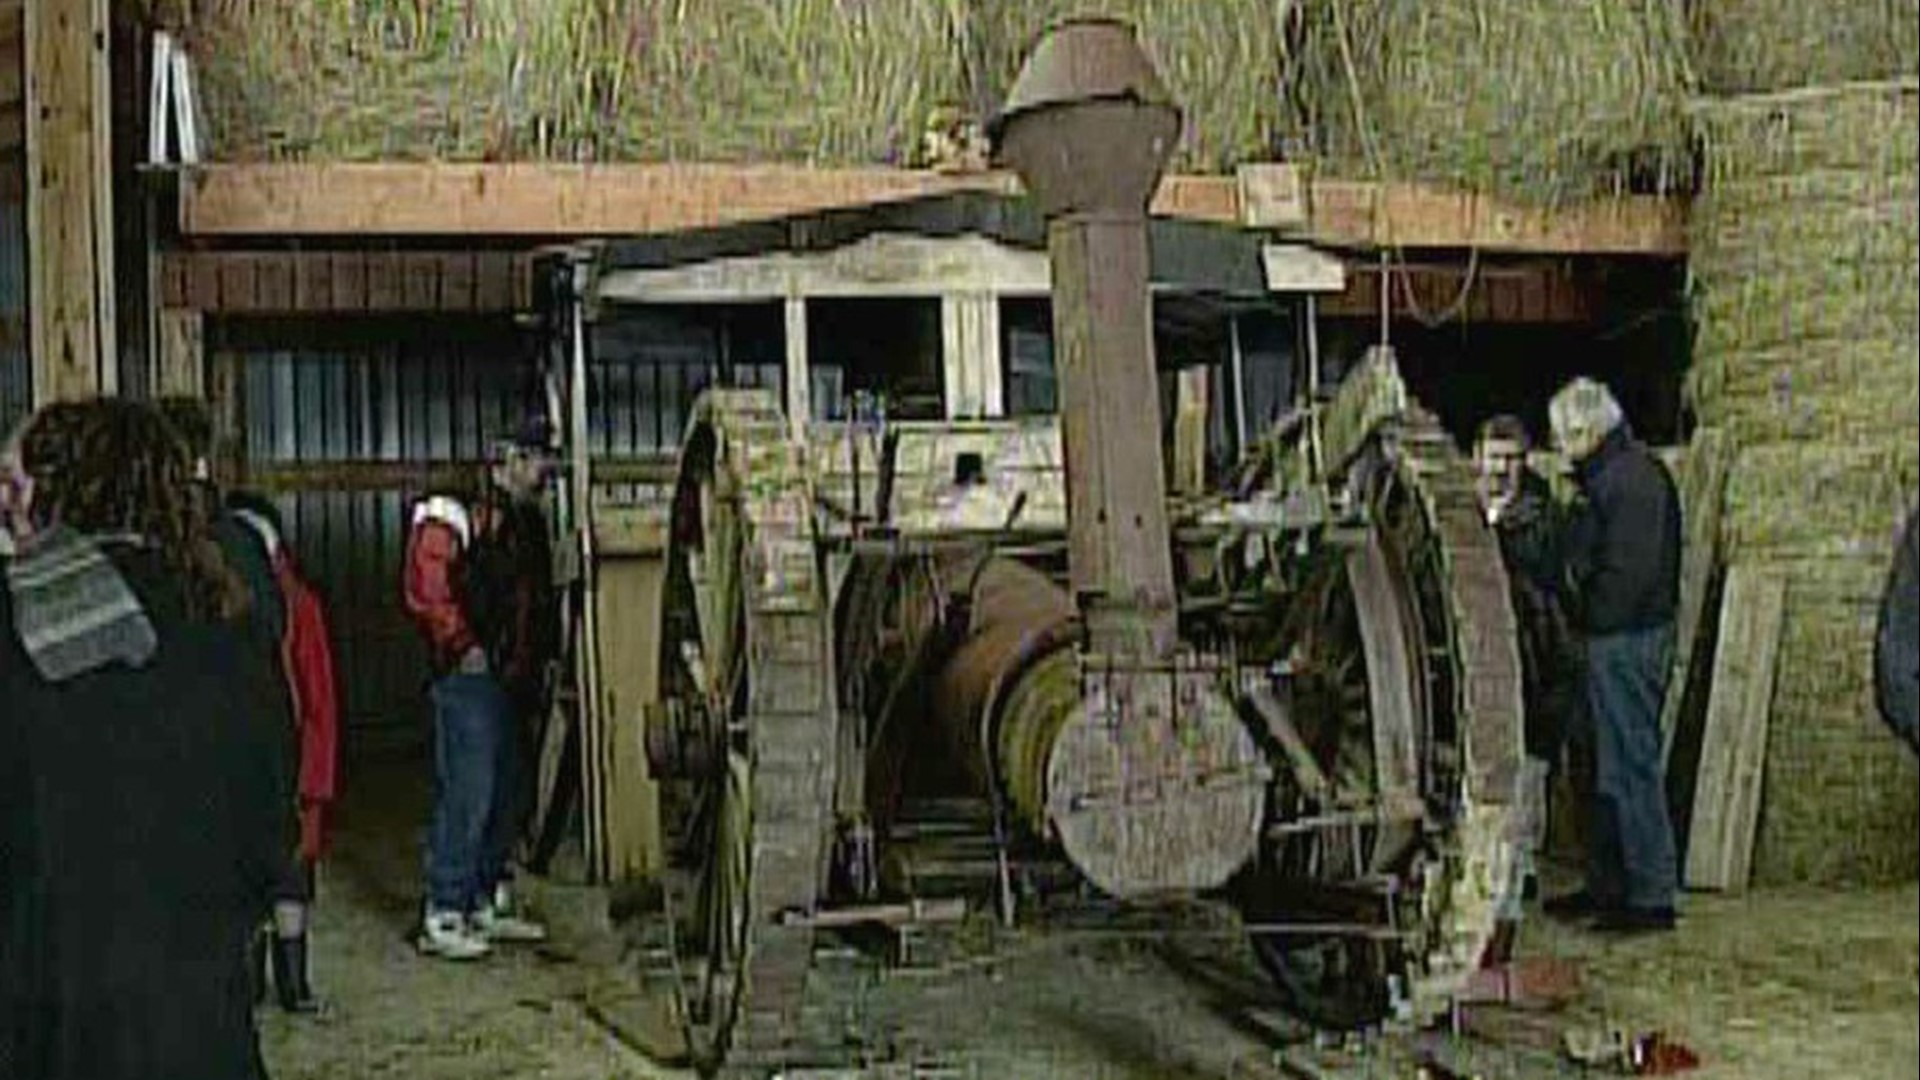 Historic Tractor